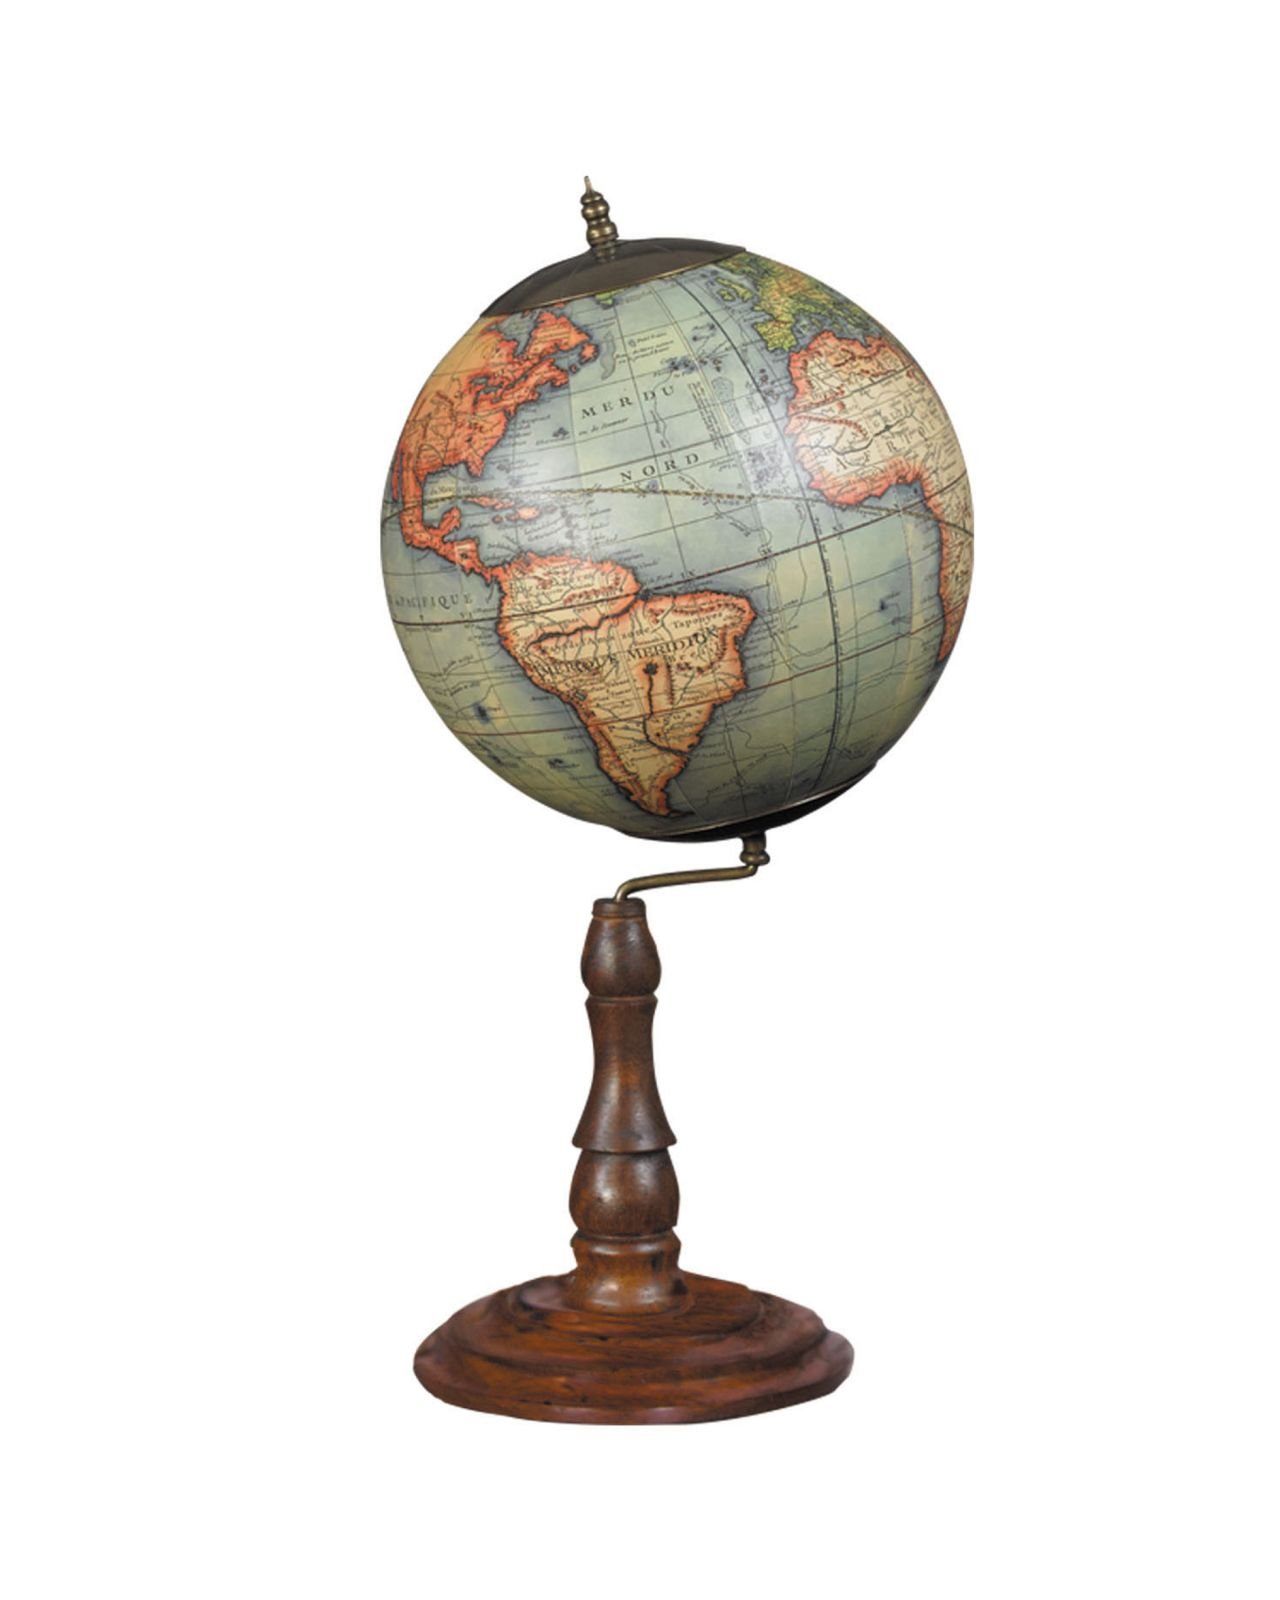 Vaugondy 1745 globe